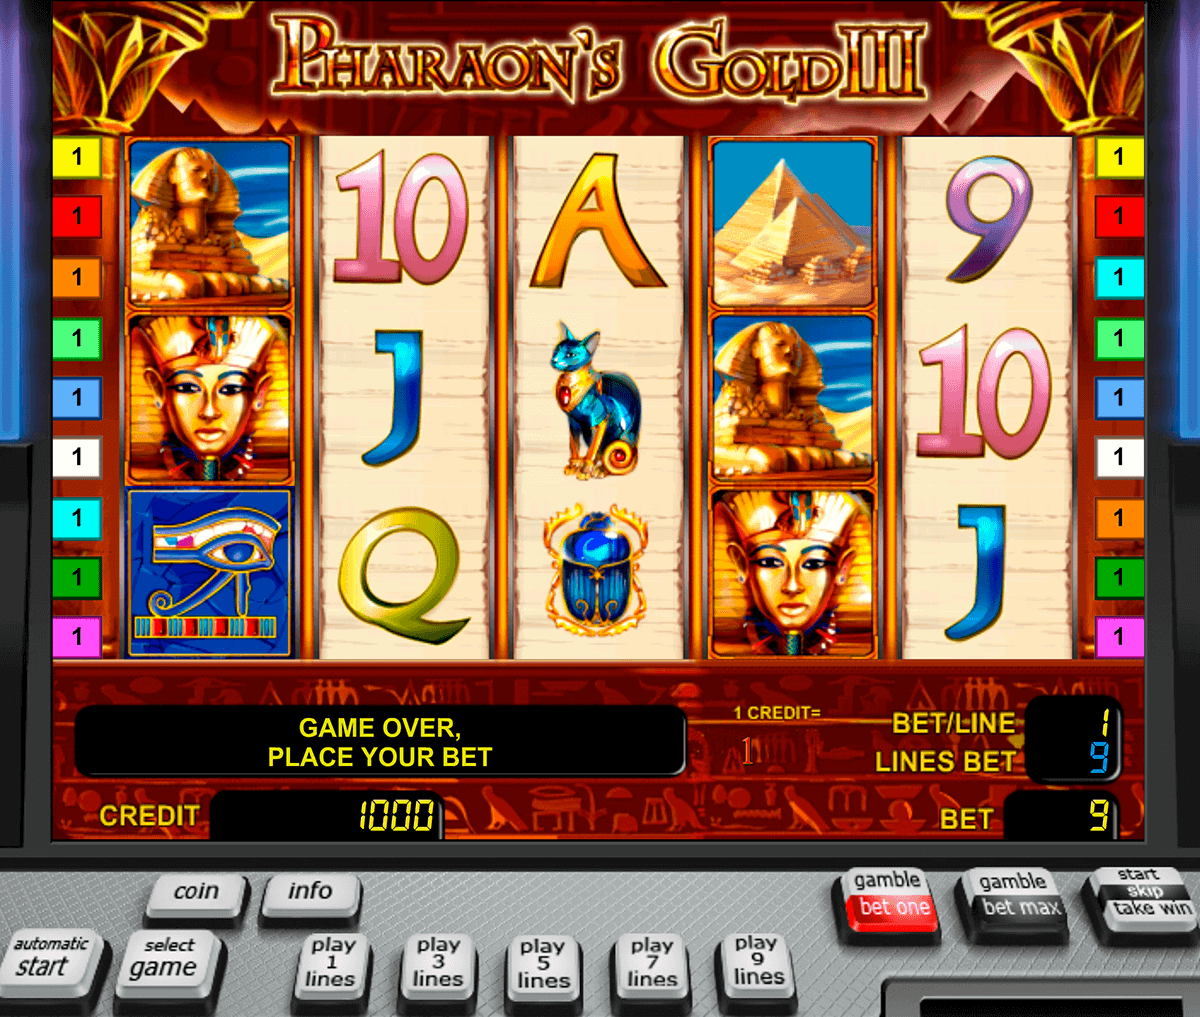 Pharaohs Slot Game